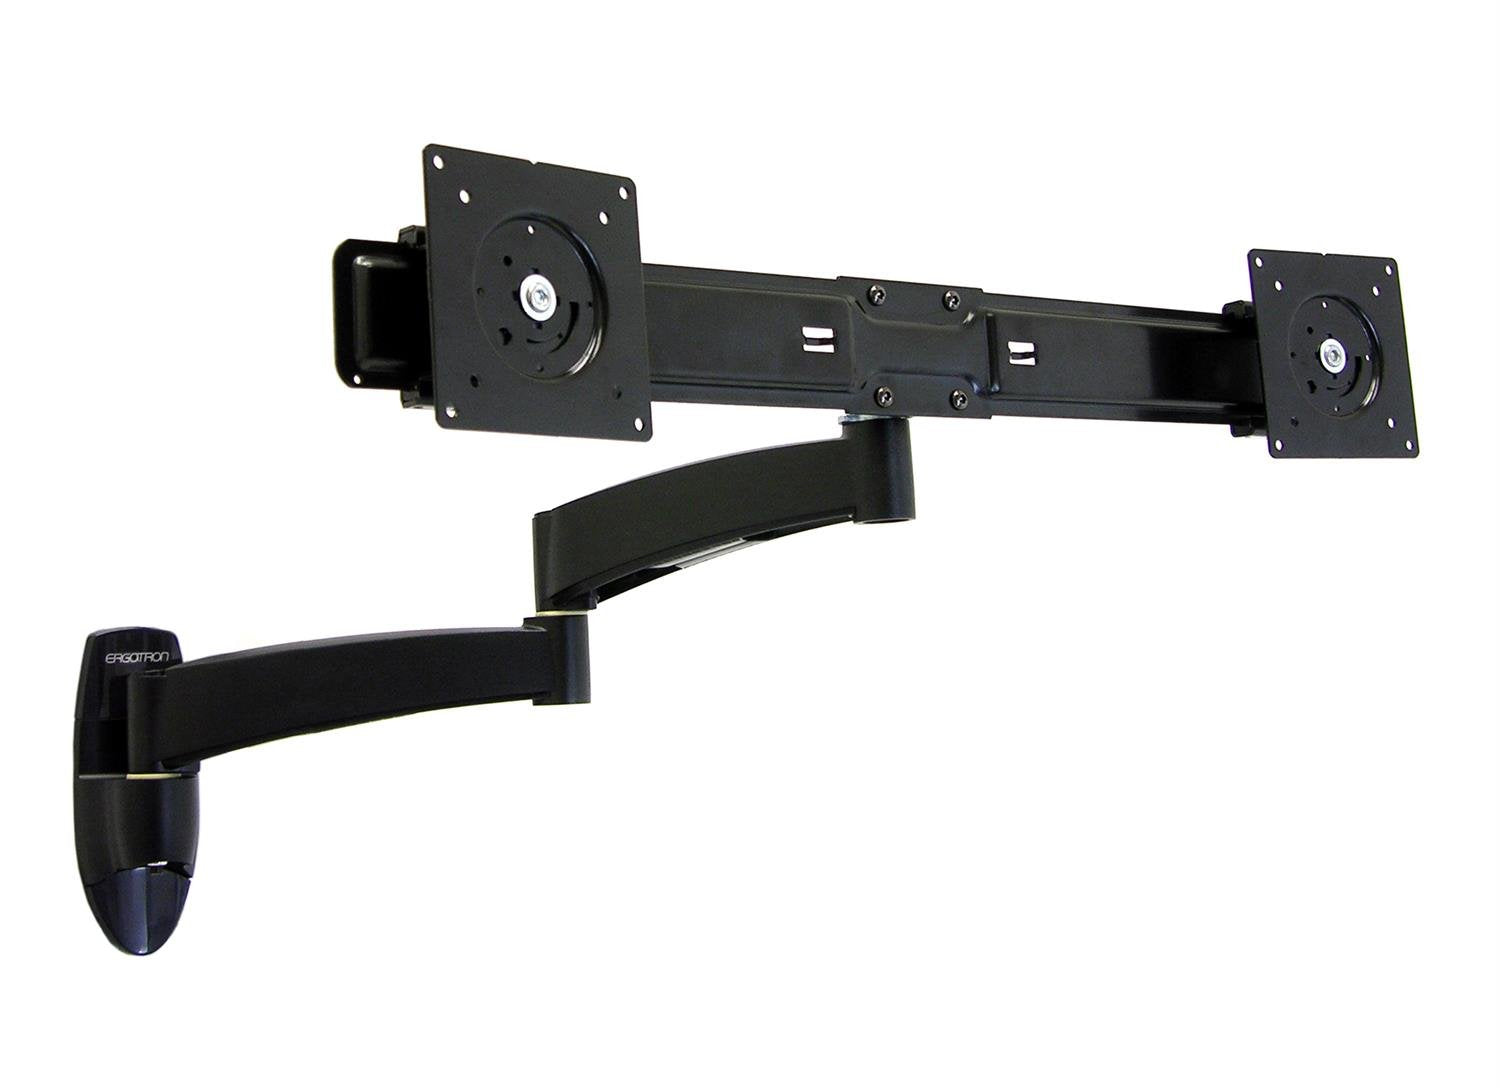 Ergotron 200 Series Dual Monitor Arm Wall Mount- 45-231-200